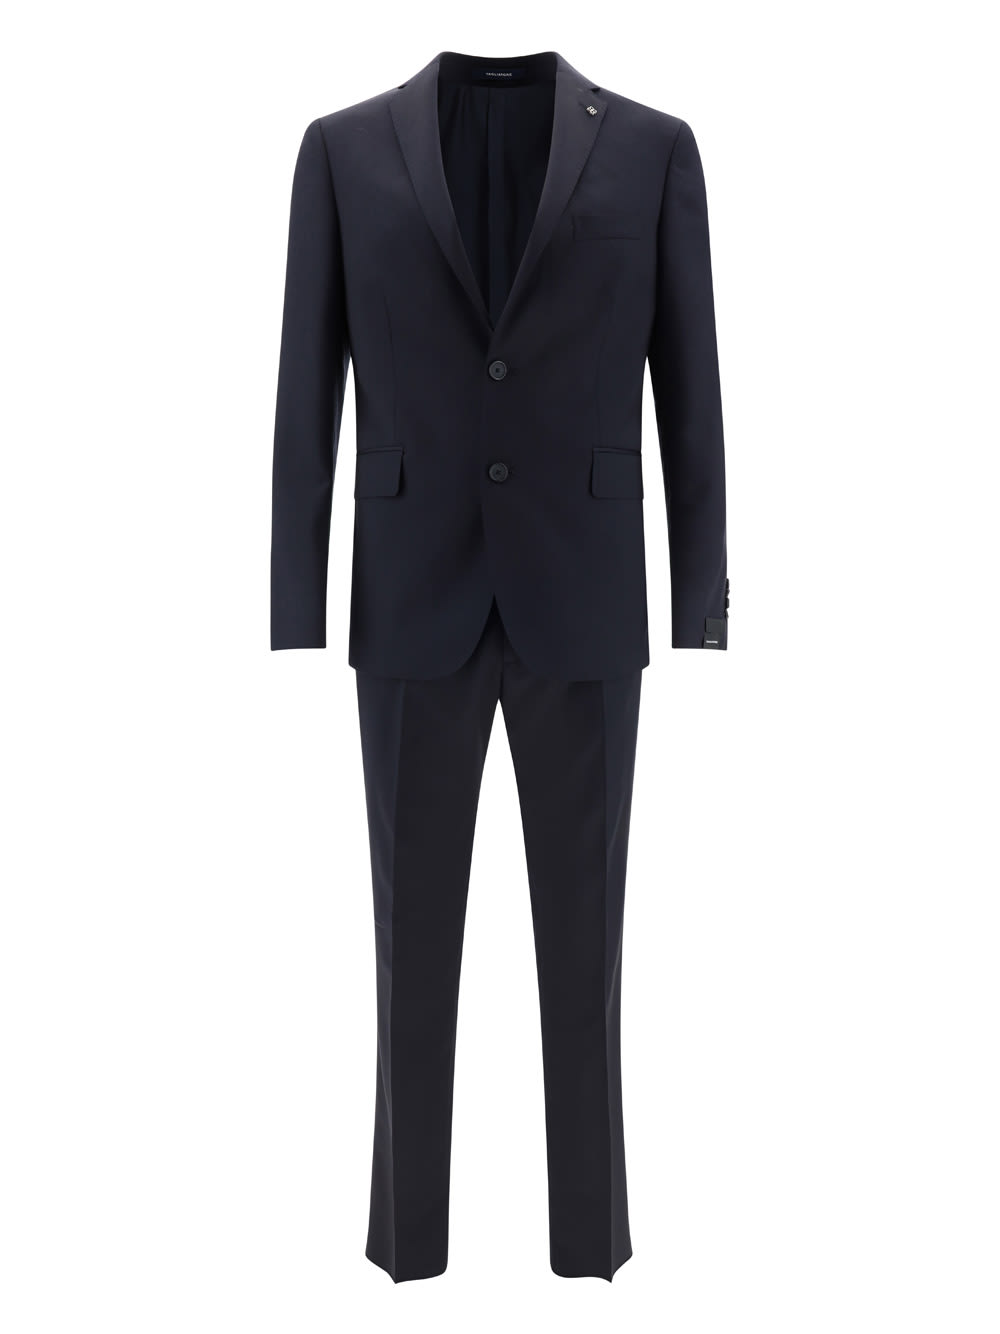 0205 Complete Suit